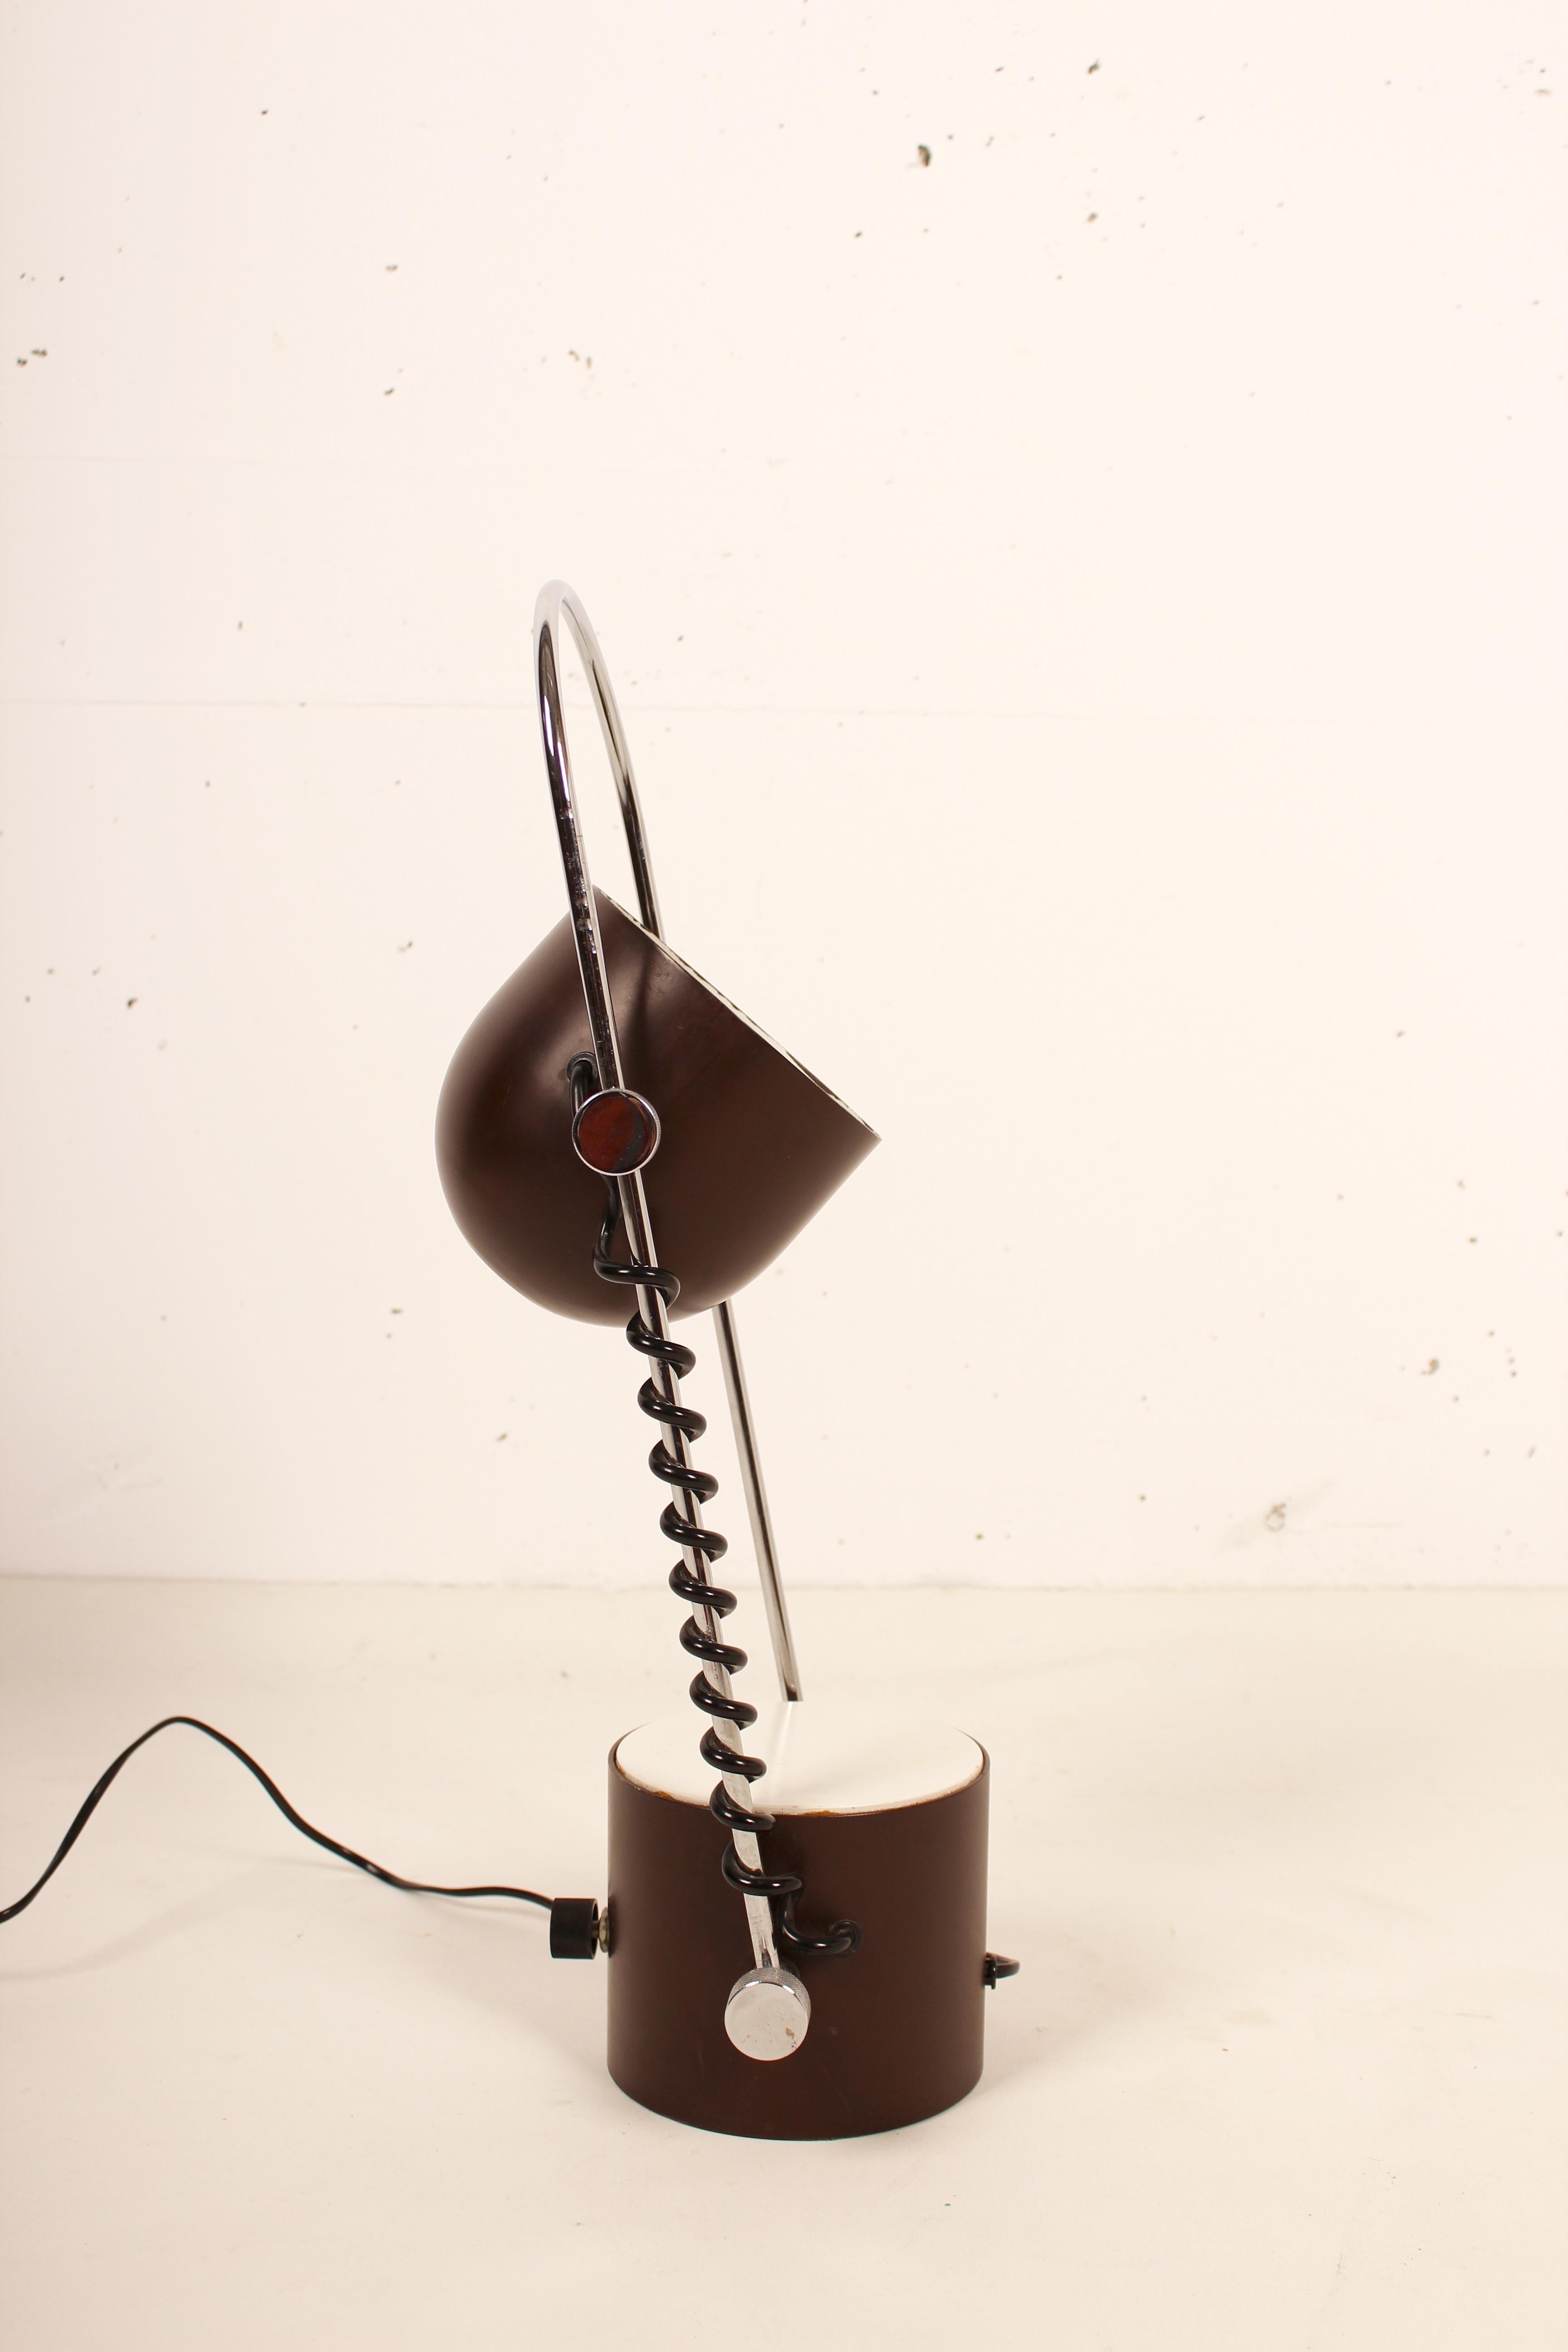 Tischlampe Madom Design von Josep Maria Magem, 1970er Jahre (Aluminium) im Angebot